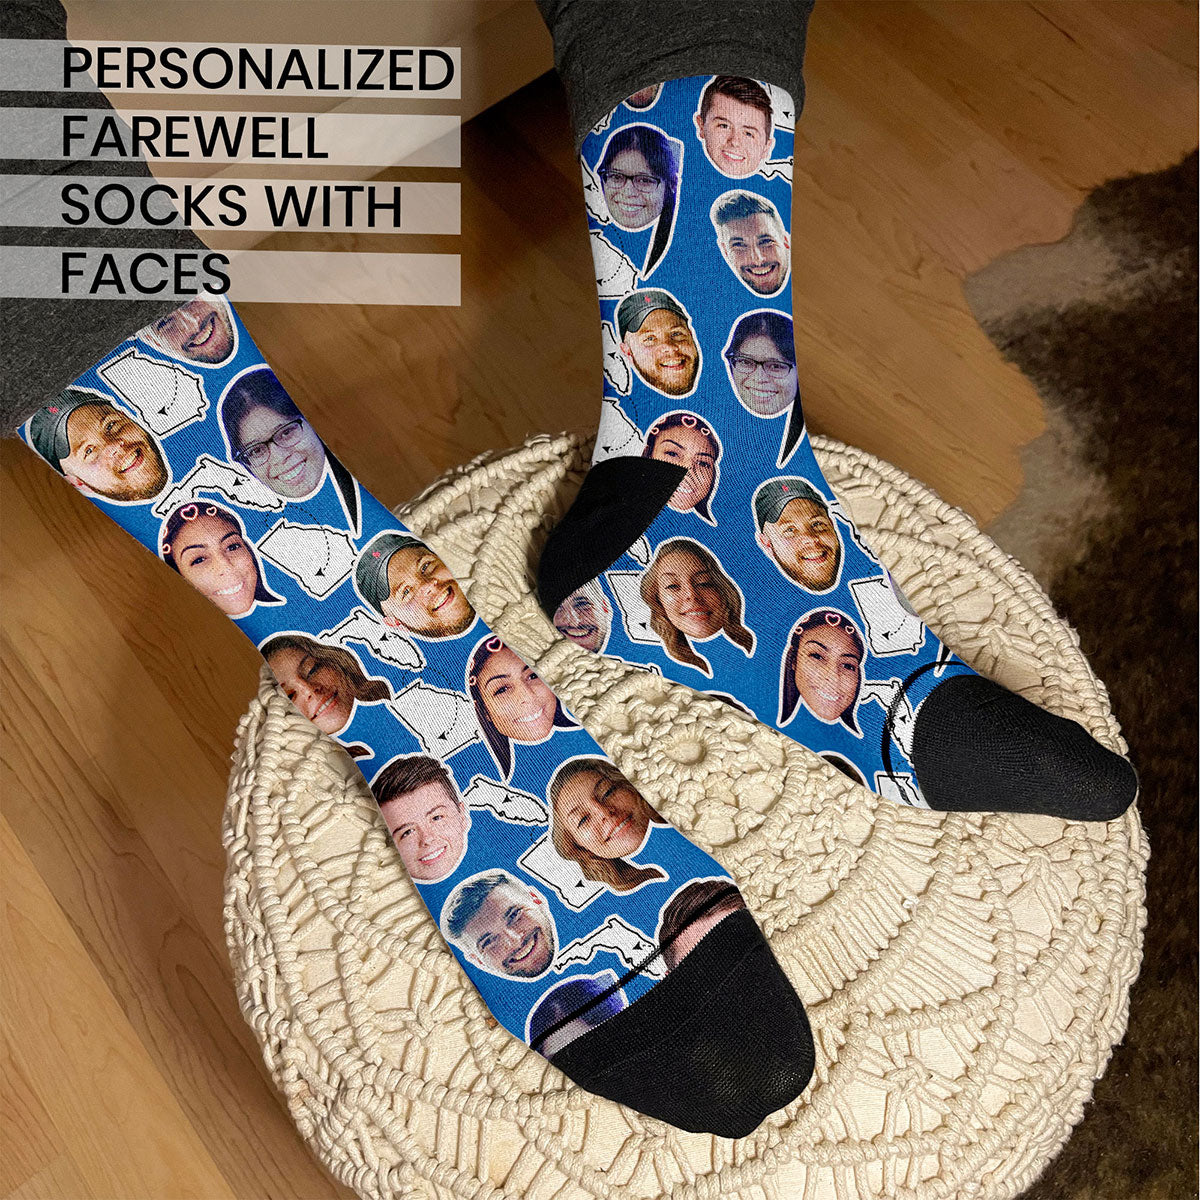 personalized farewell socks 